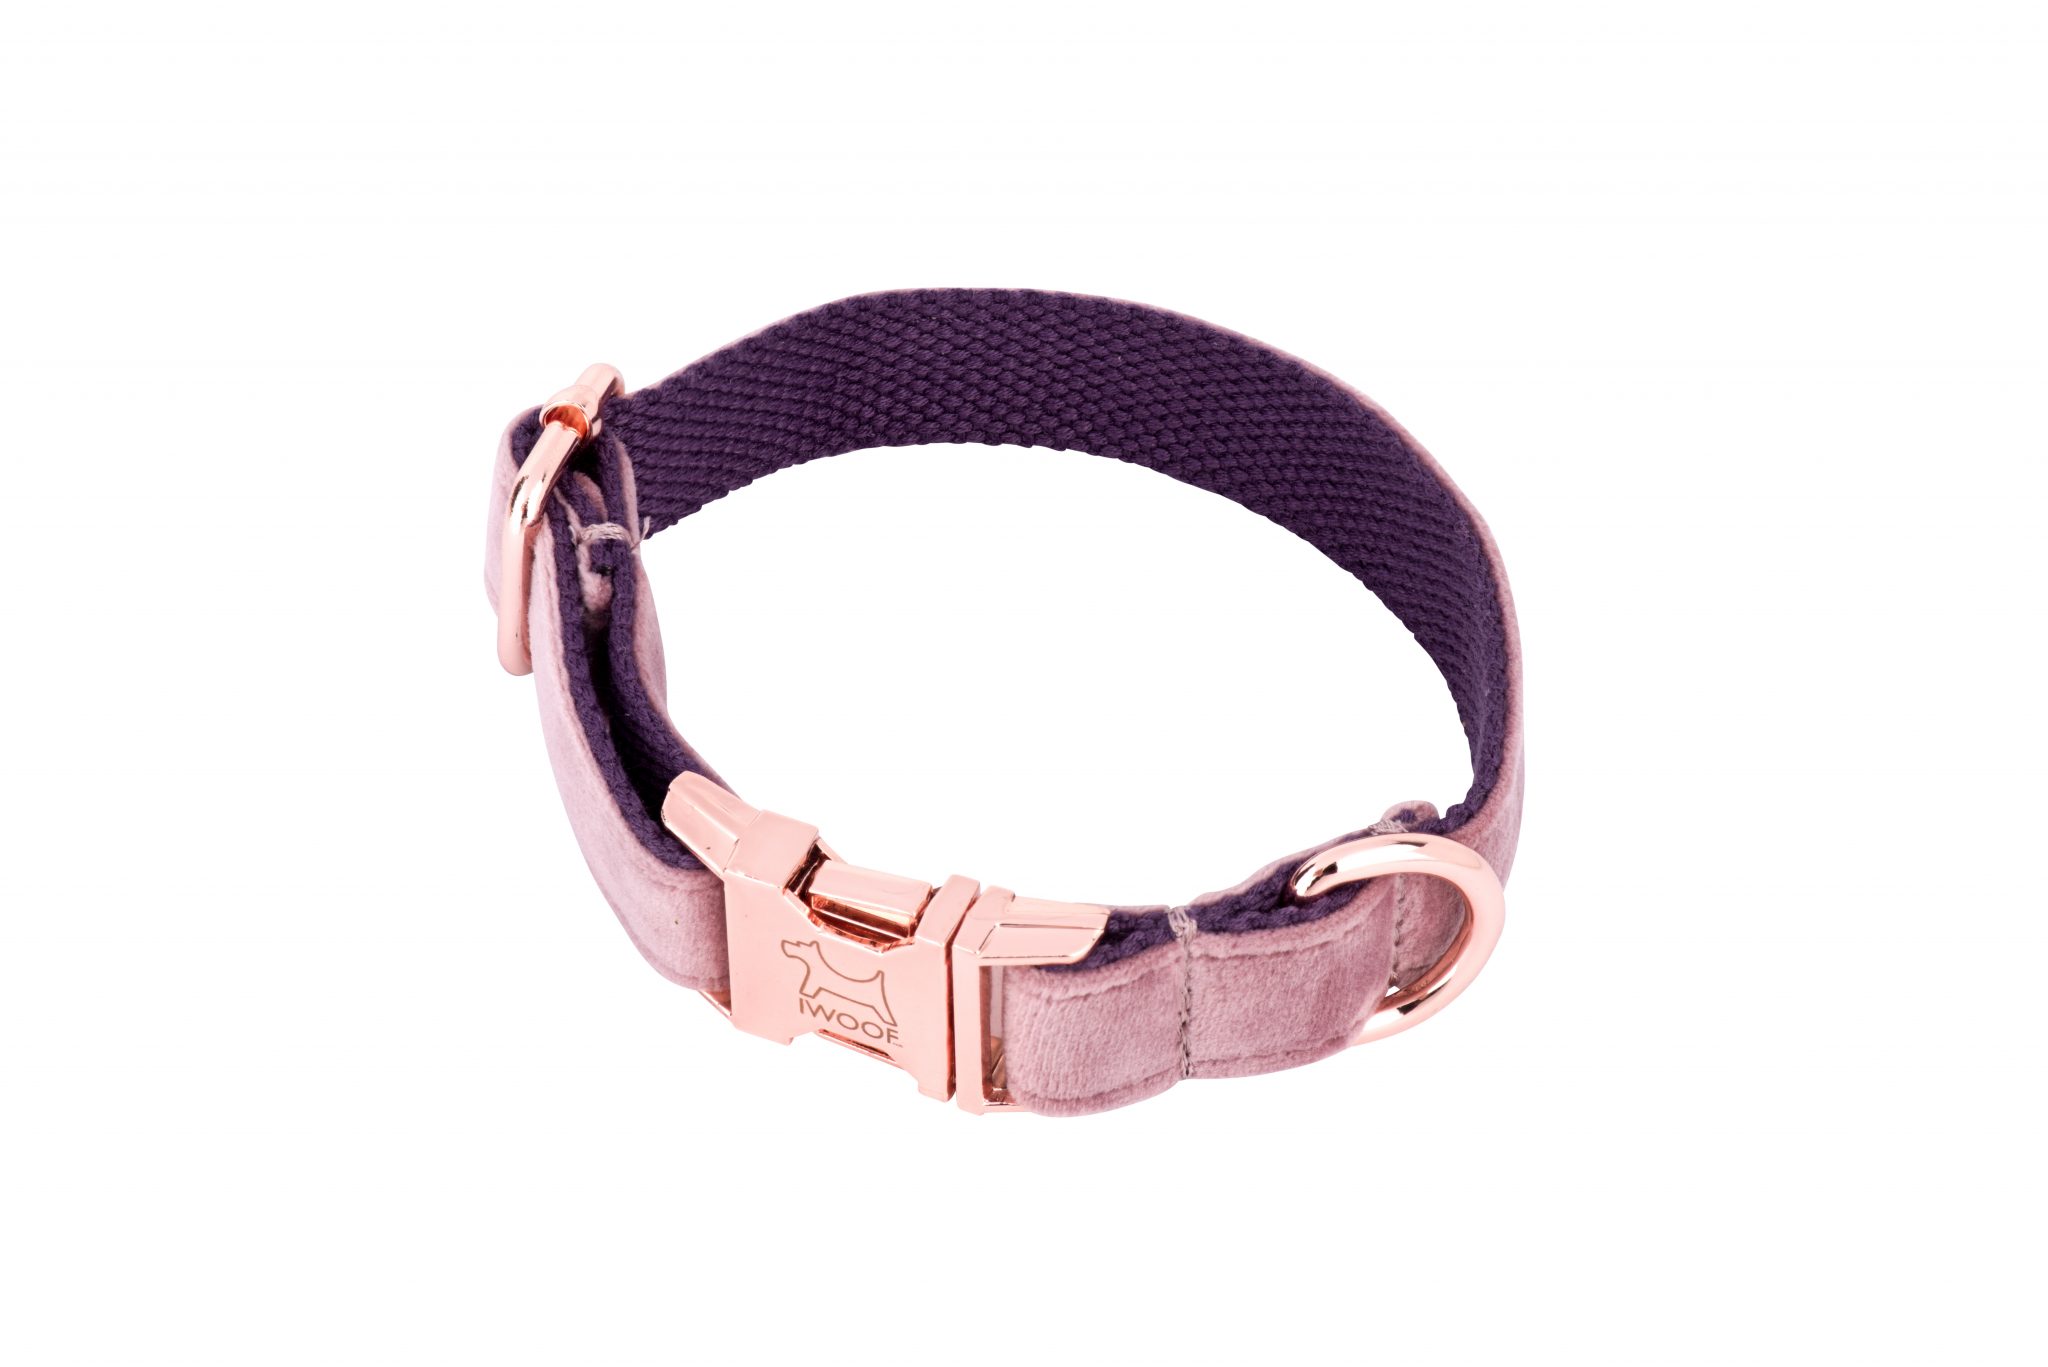 Pink Panther designer dog collar and matching designer dog lead by IWOOF